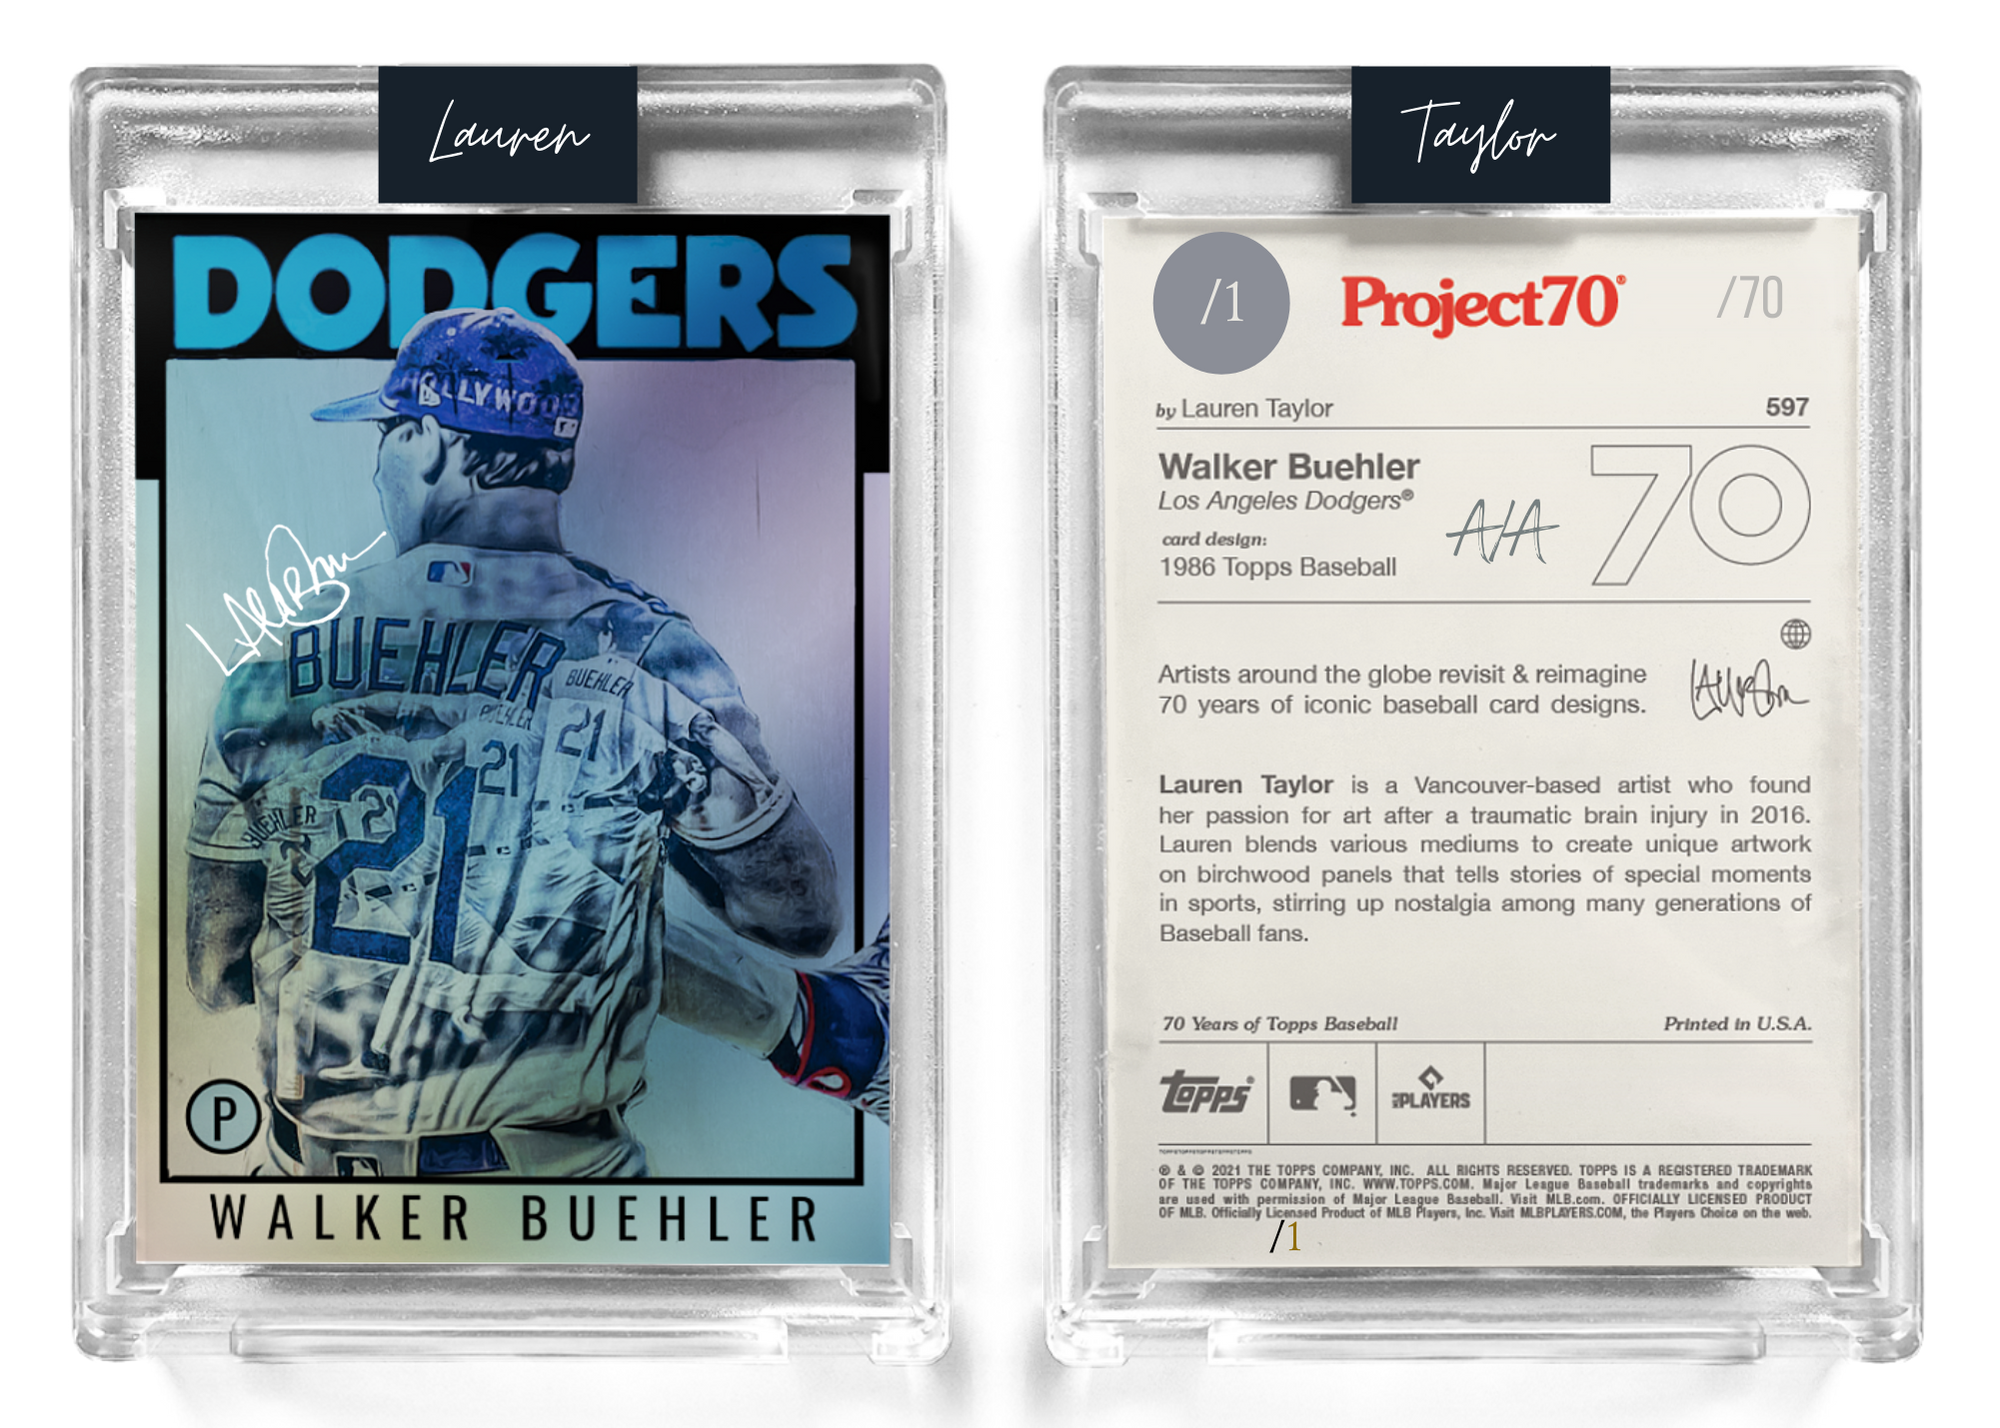 1/1 Chrome Metallic Artist Signature - Walker Buehler - Foil Variant 130pt Card #597 by Lauren Taylor - Baseball Card